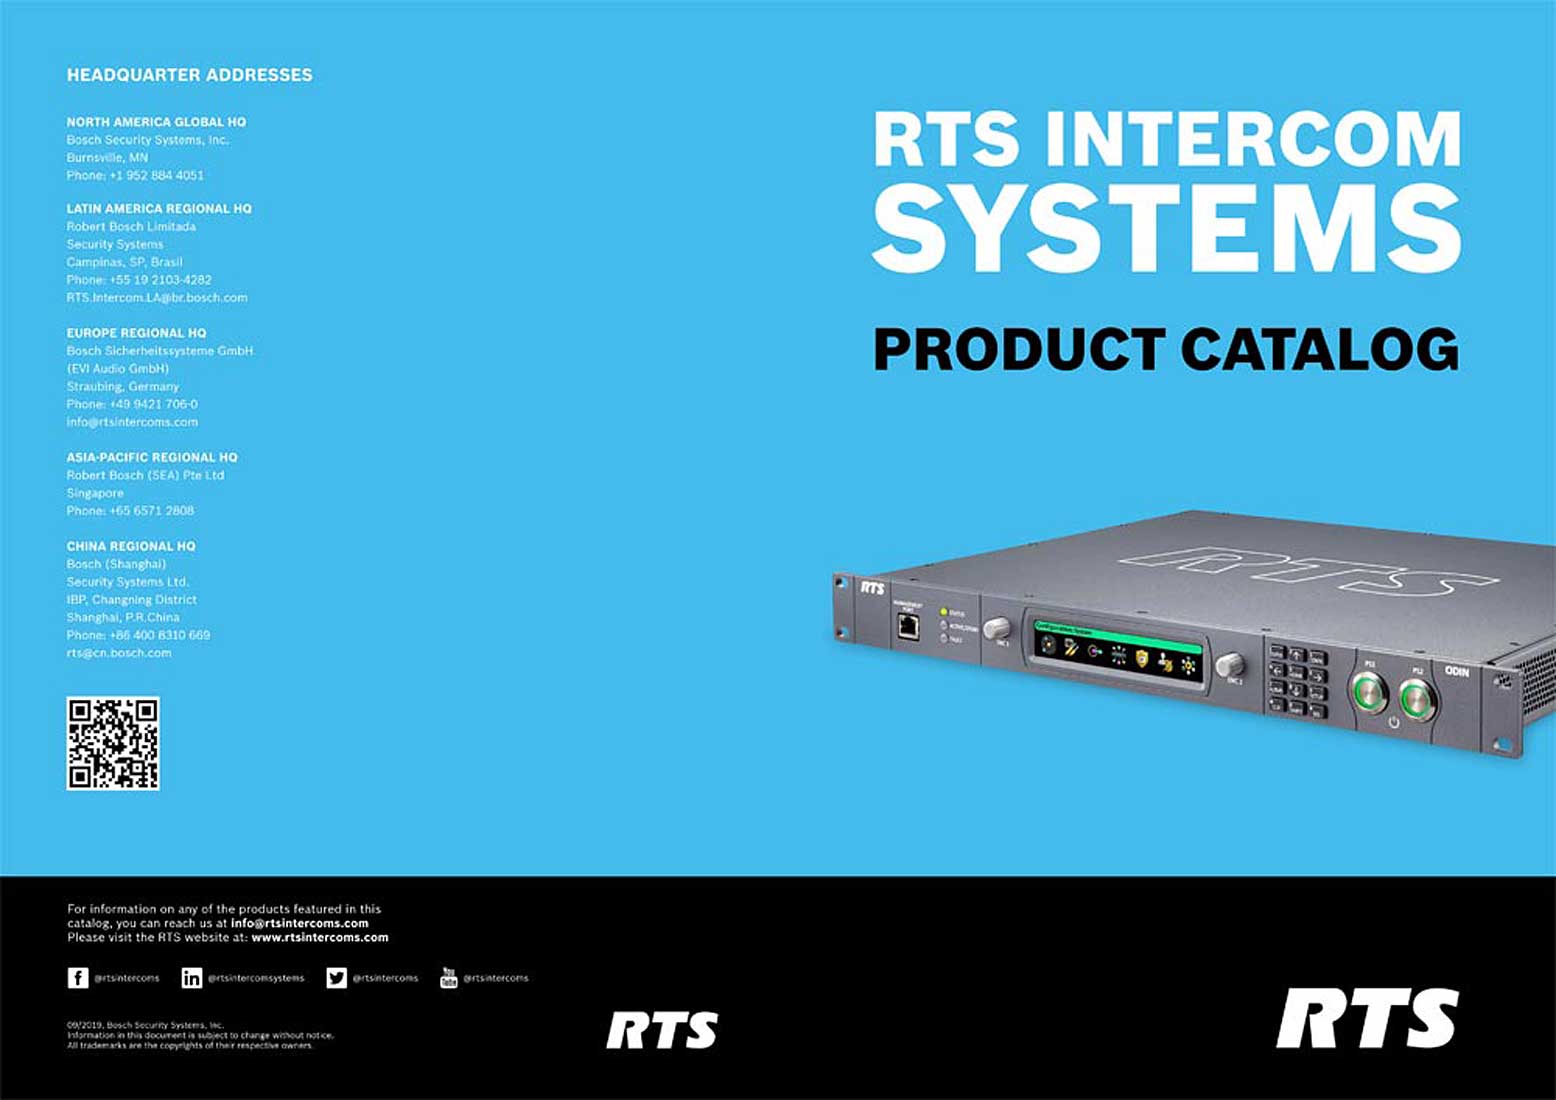 RTS CAT.GEN. 2019/09 RTS INTERCOM SYSTEMS - PRODUCT CATALOG